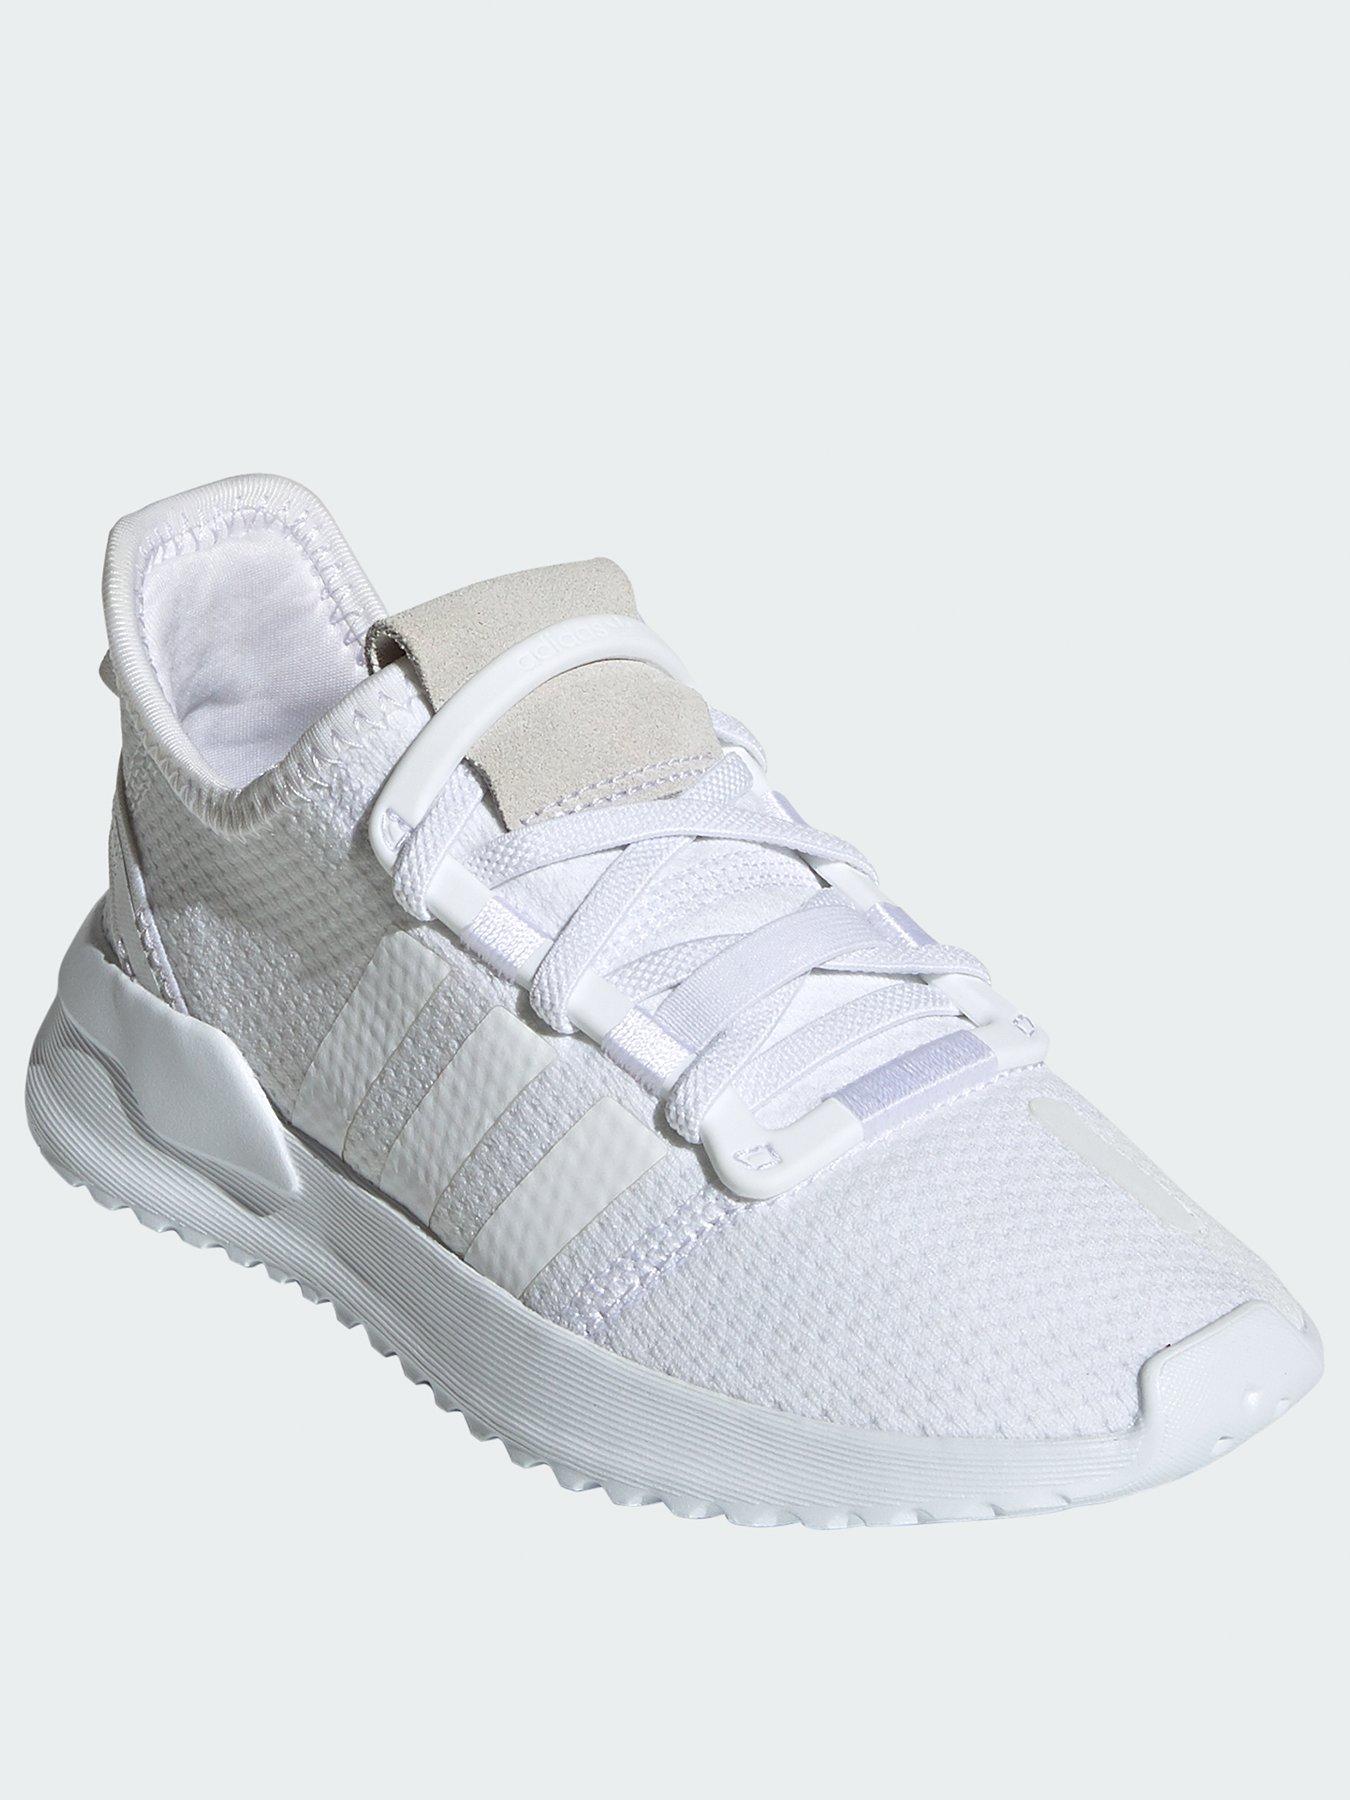 new adidas white trainers